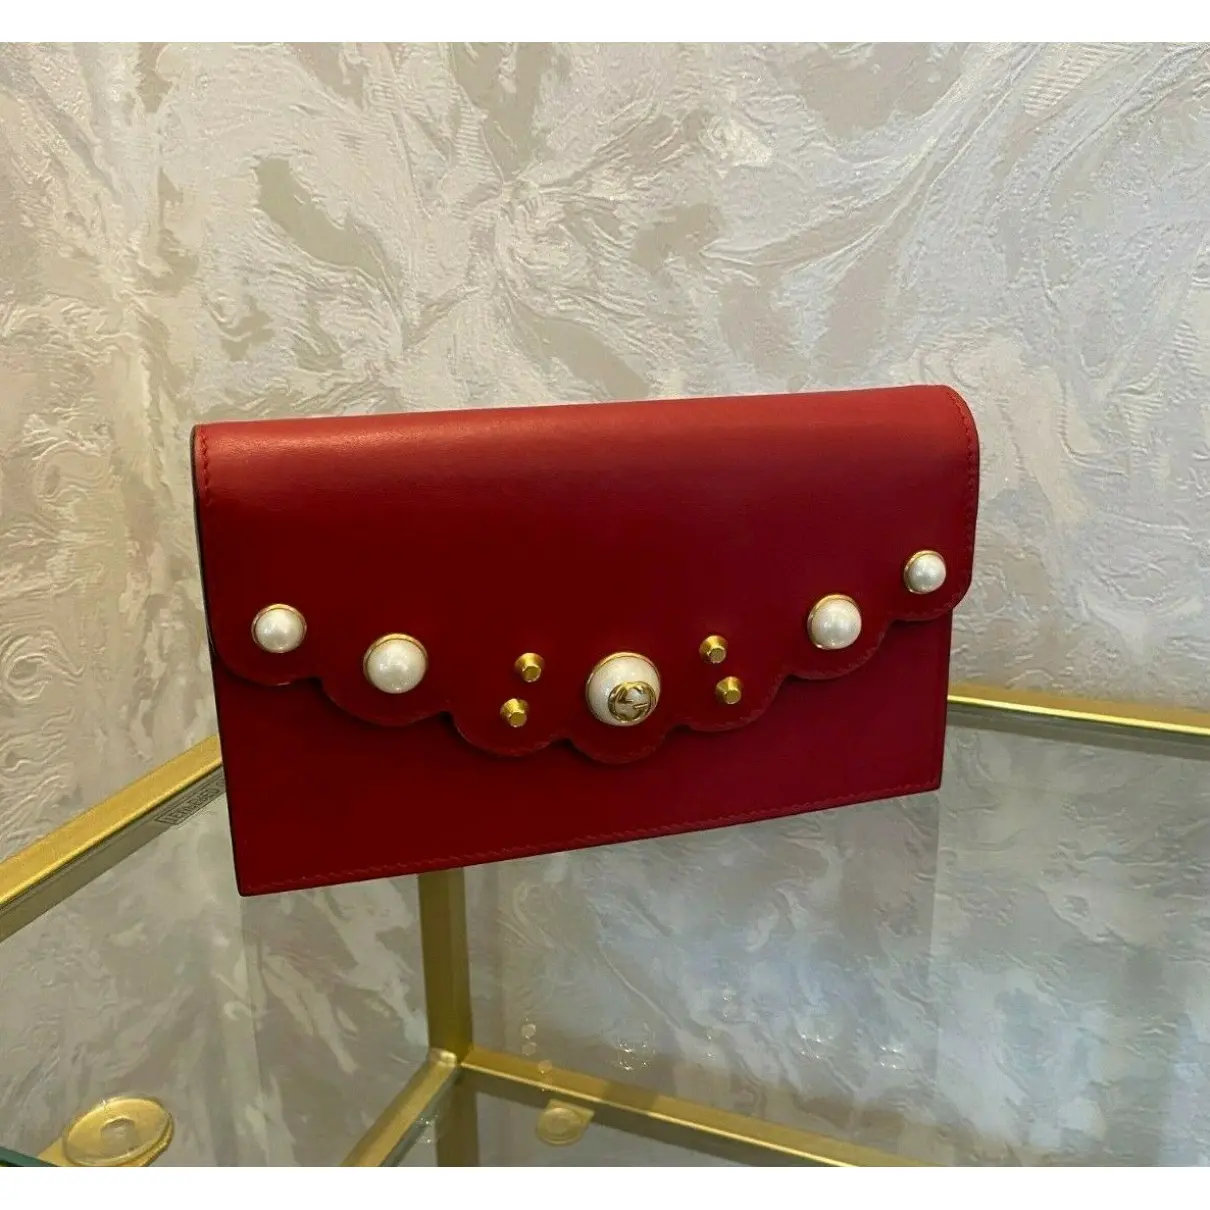 Peony leather handbag Gucci